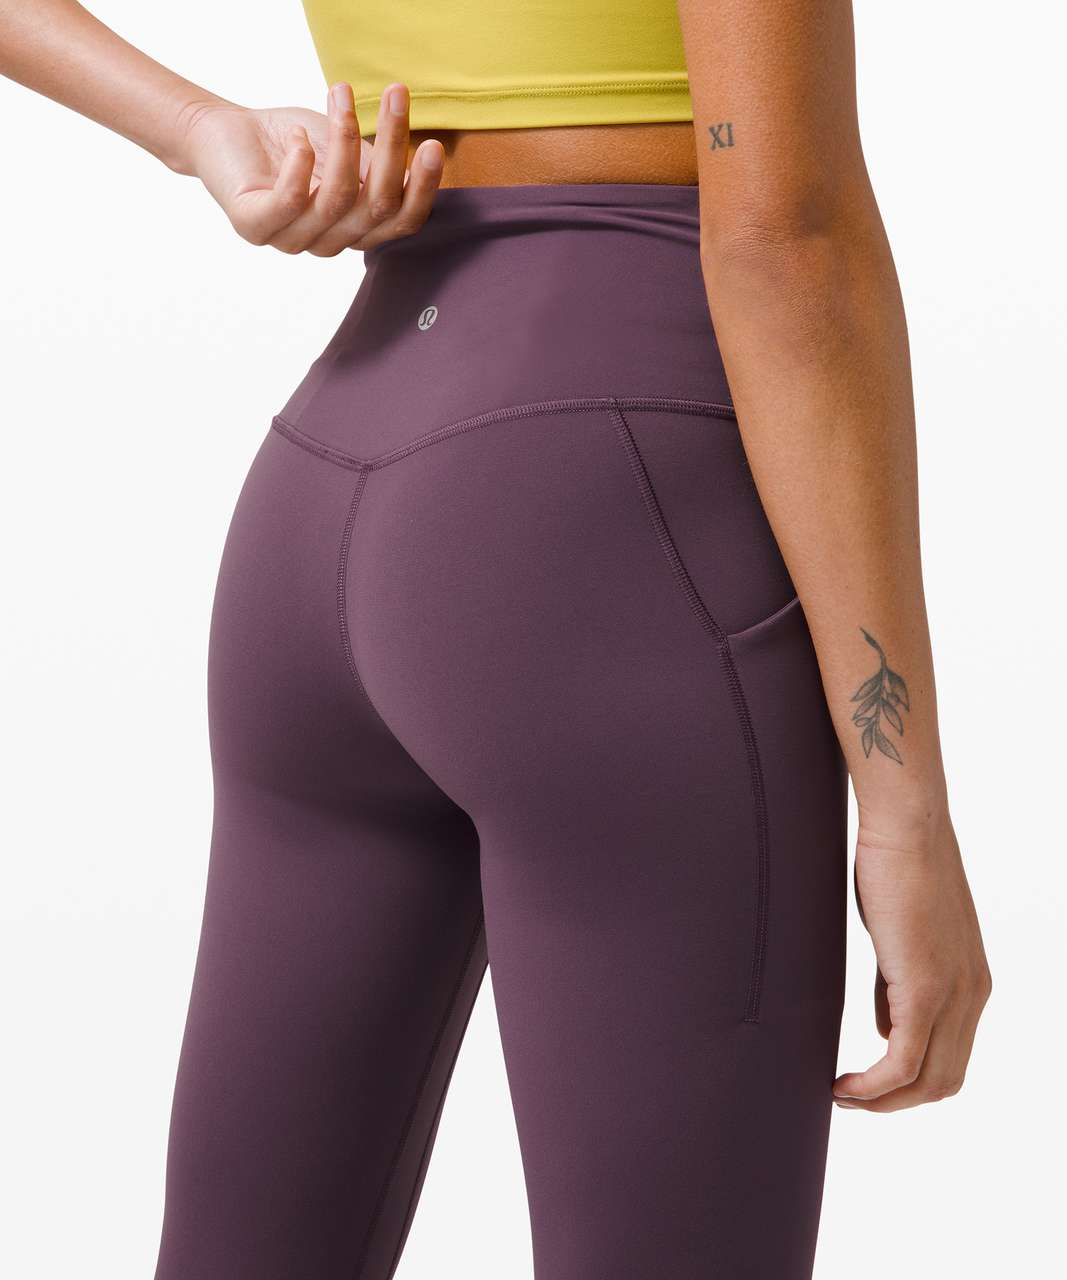 Lululemon Align High-Rise Pant with Pockets 25 - Size 12 - Moonlit Magenta  NWT 